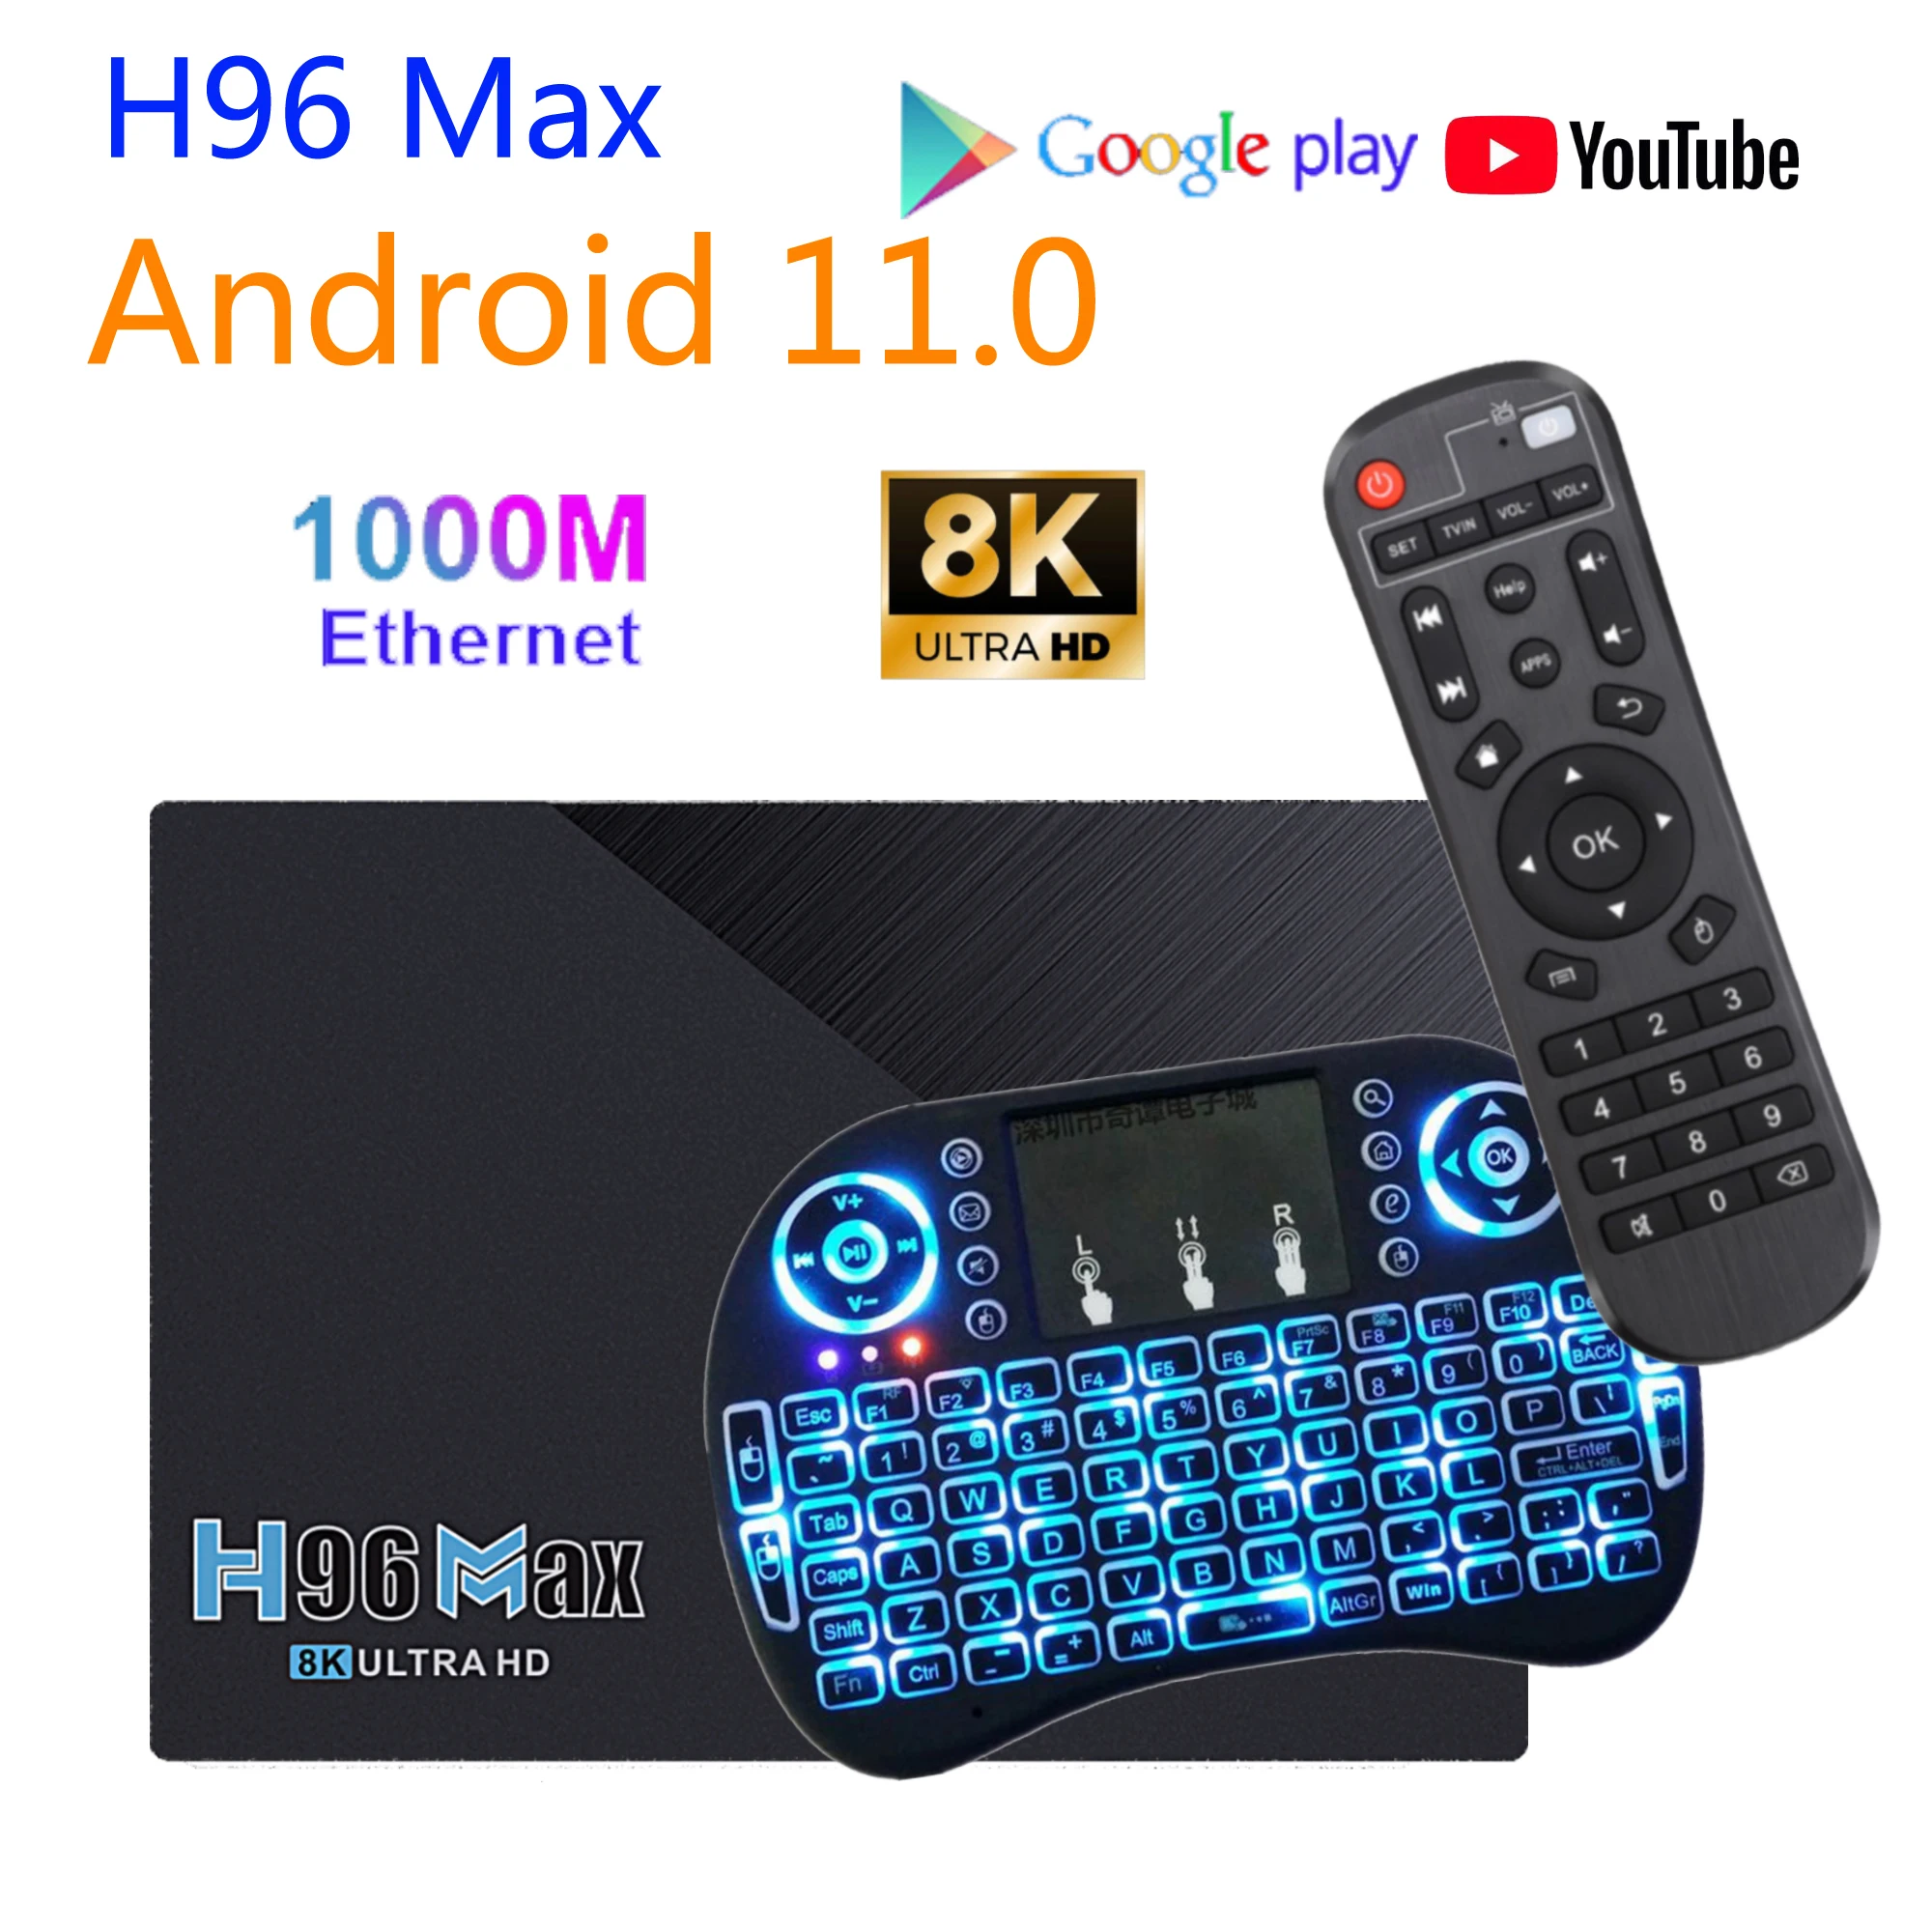 

H96 Max Android Tv Box 1000M Ethernet 8K Decoder 4K Ultra Hd Yotube Media Player Google Play HDR 4G 8G Tv Set-Top Box Android 11